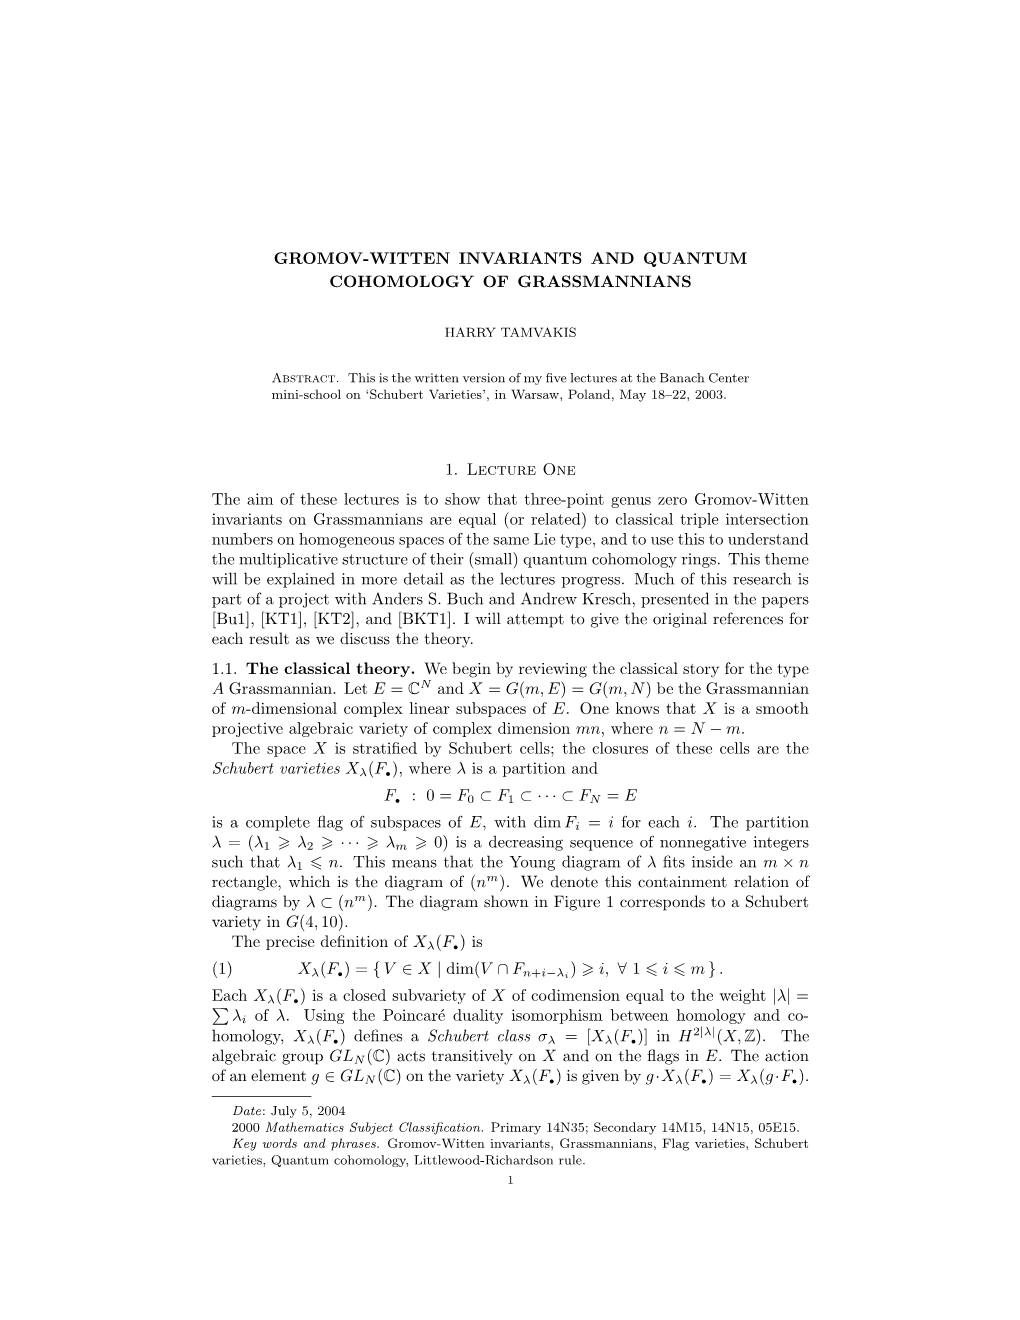 Gromov-Witten Invariants and Quantum Cohomology of Grassmannians